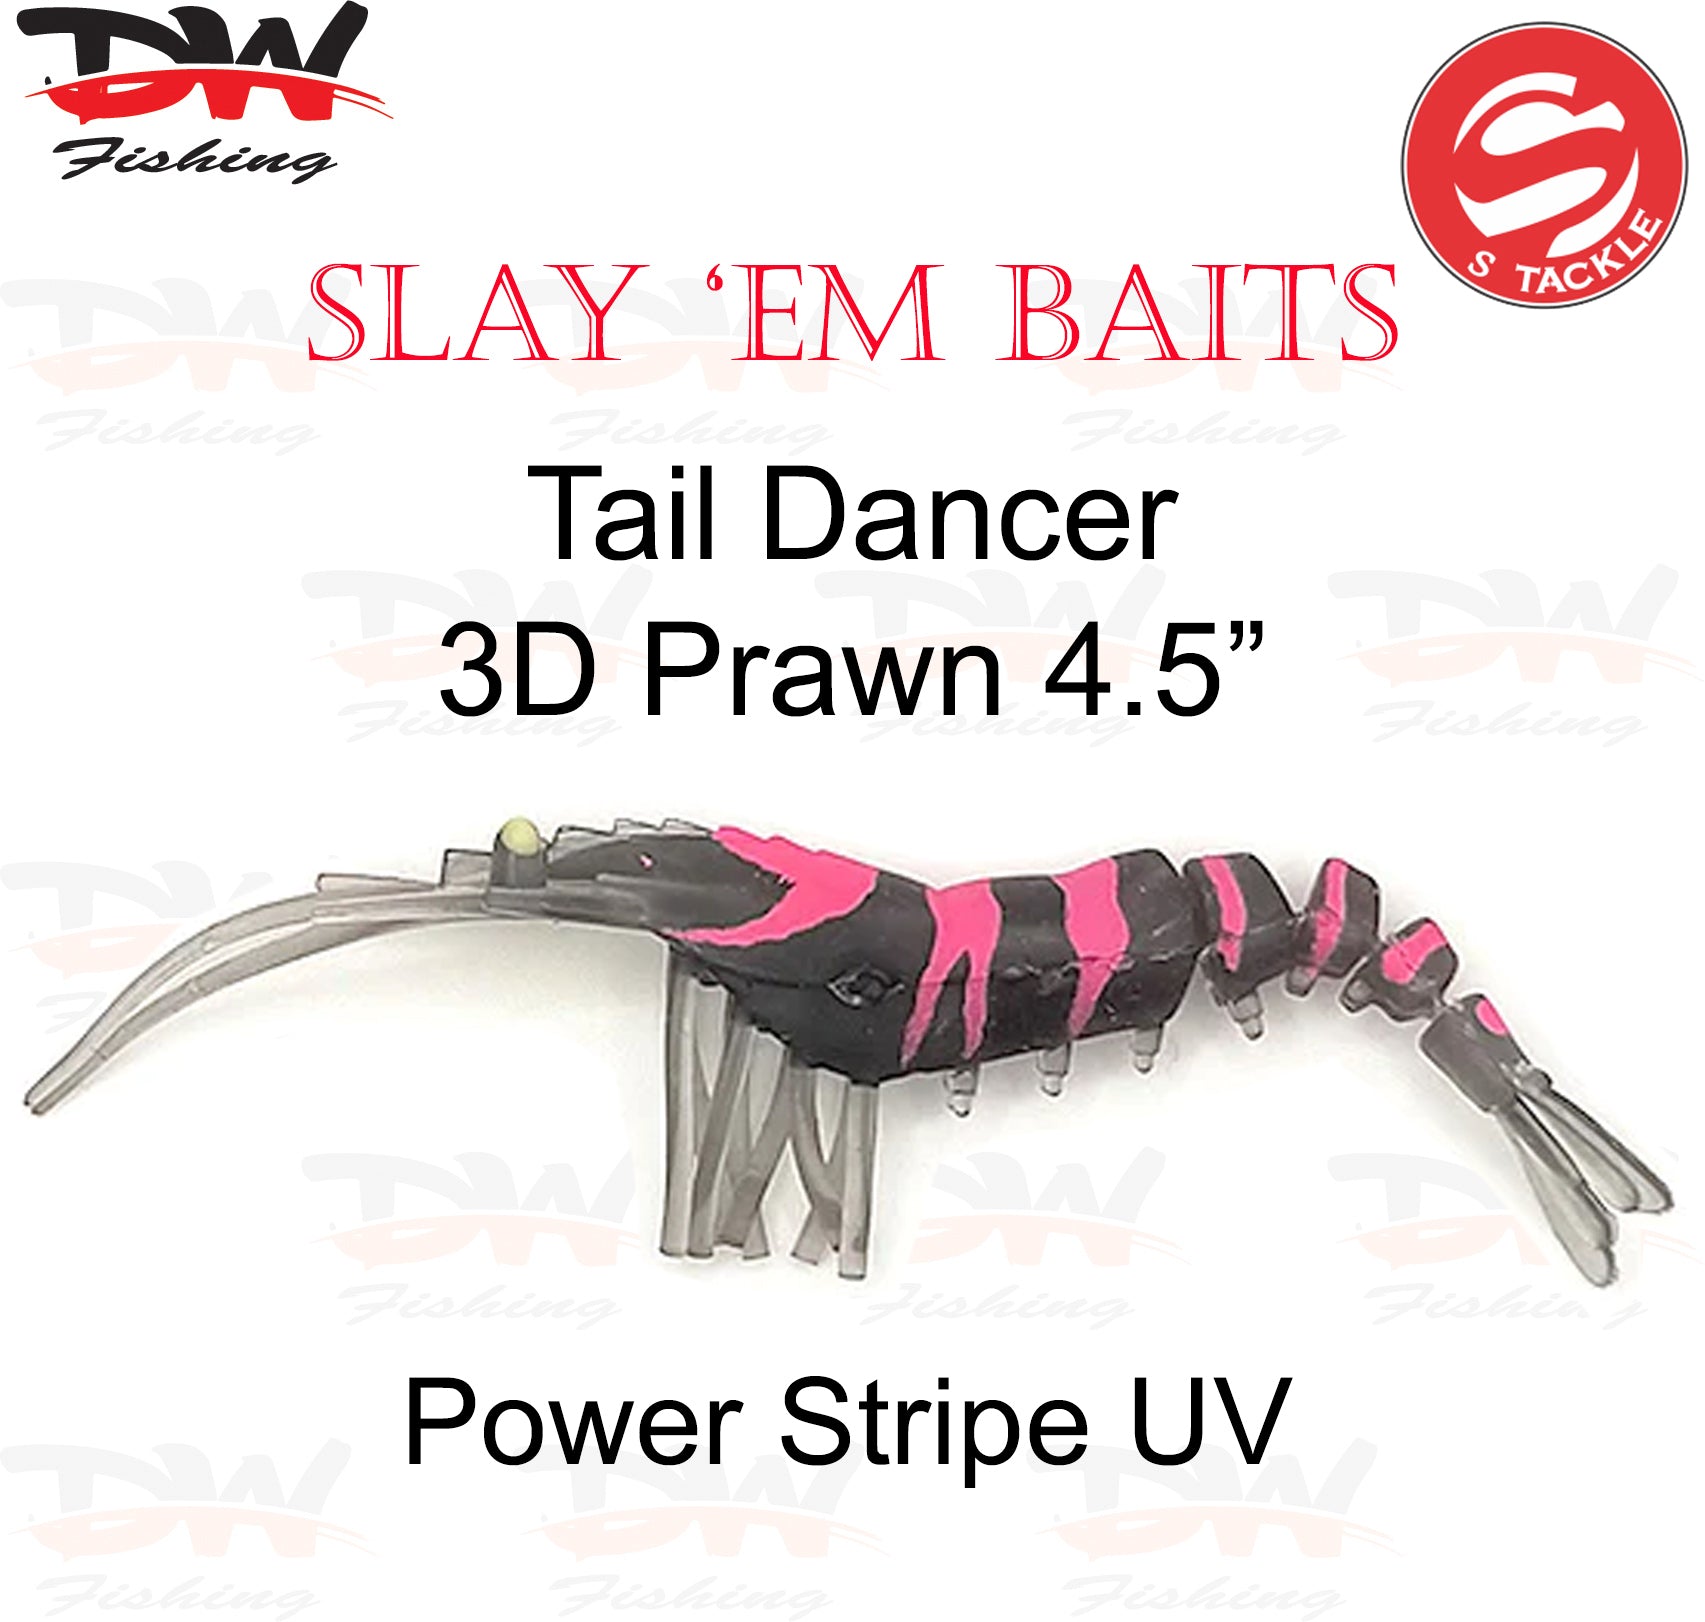 S Tackle 3D tail Dancer prawn lure 4.5 inch Imitation soft plastic lure Colour Power Stripe UV